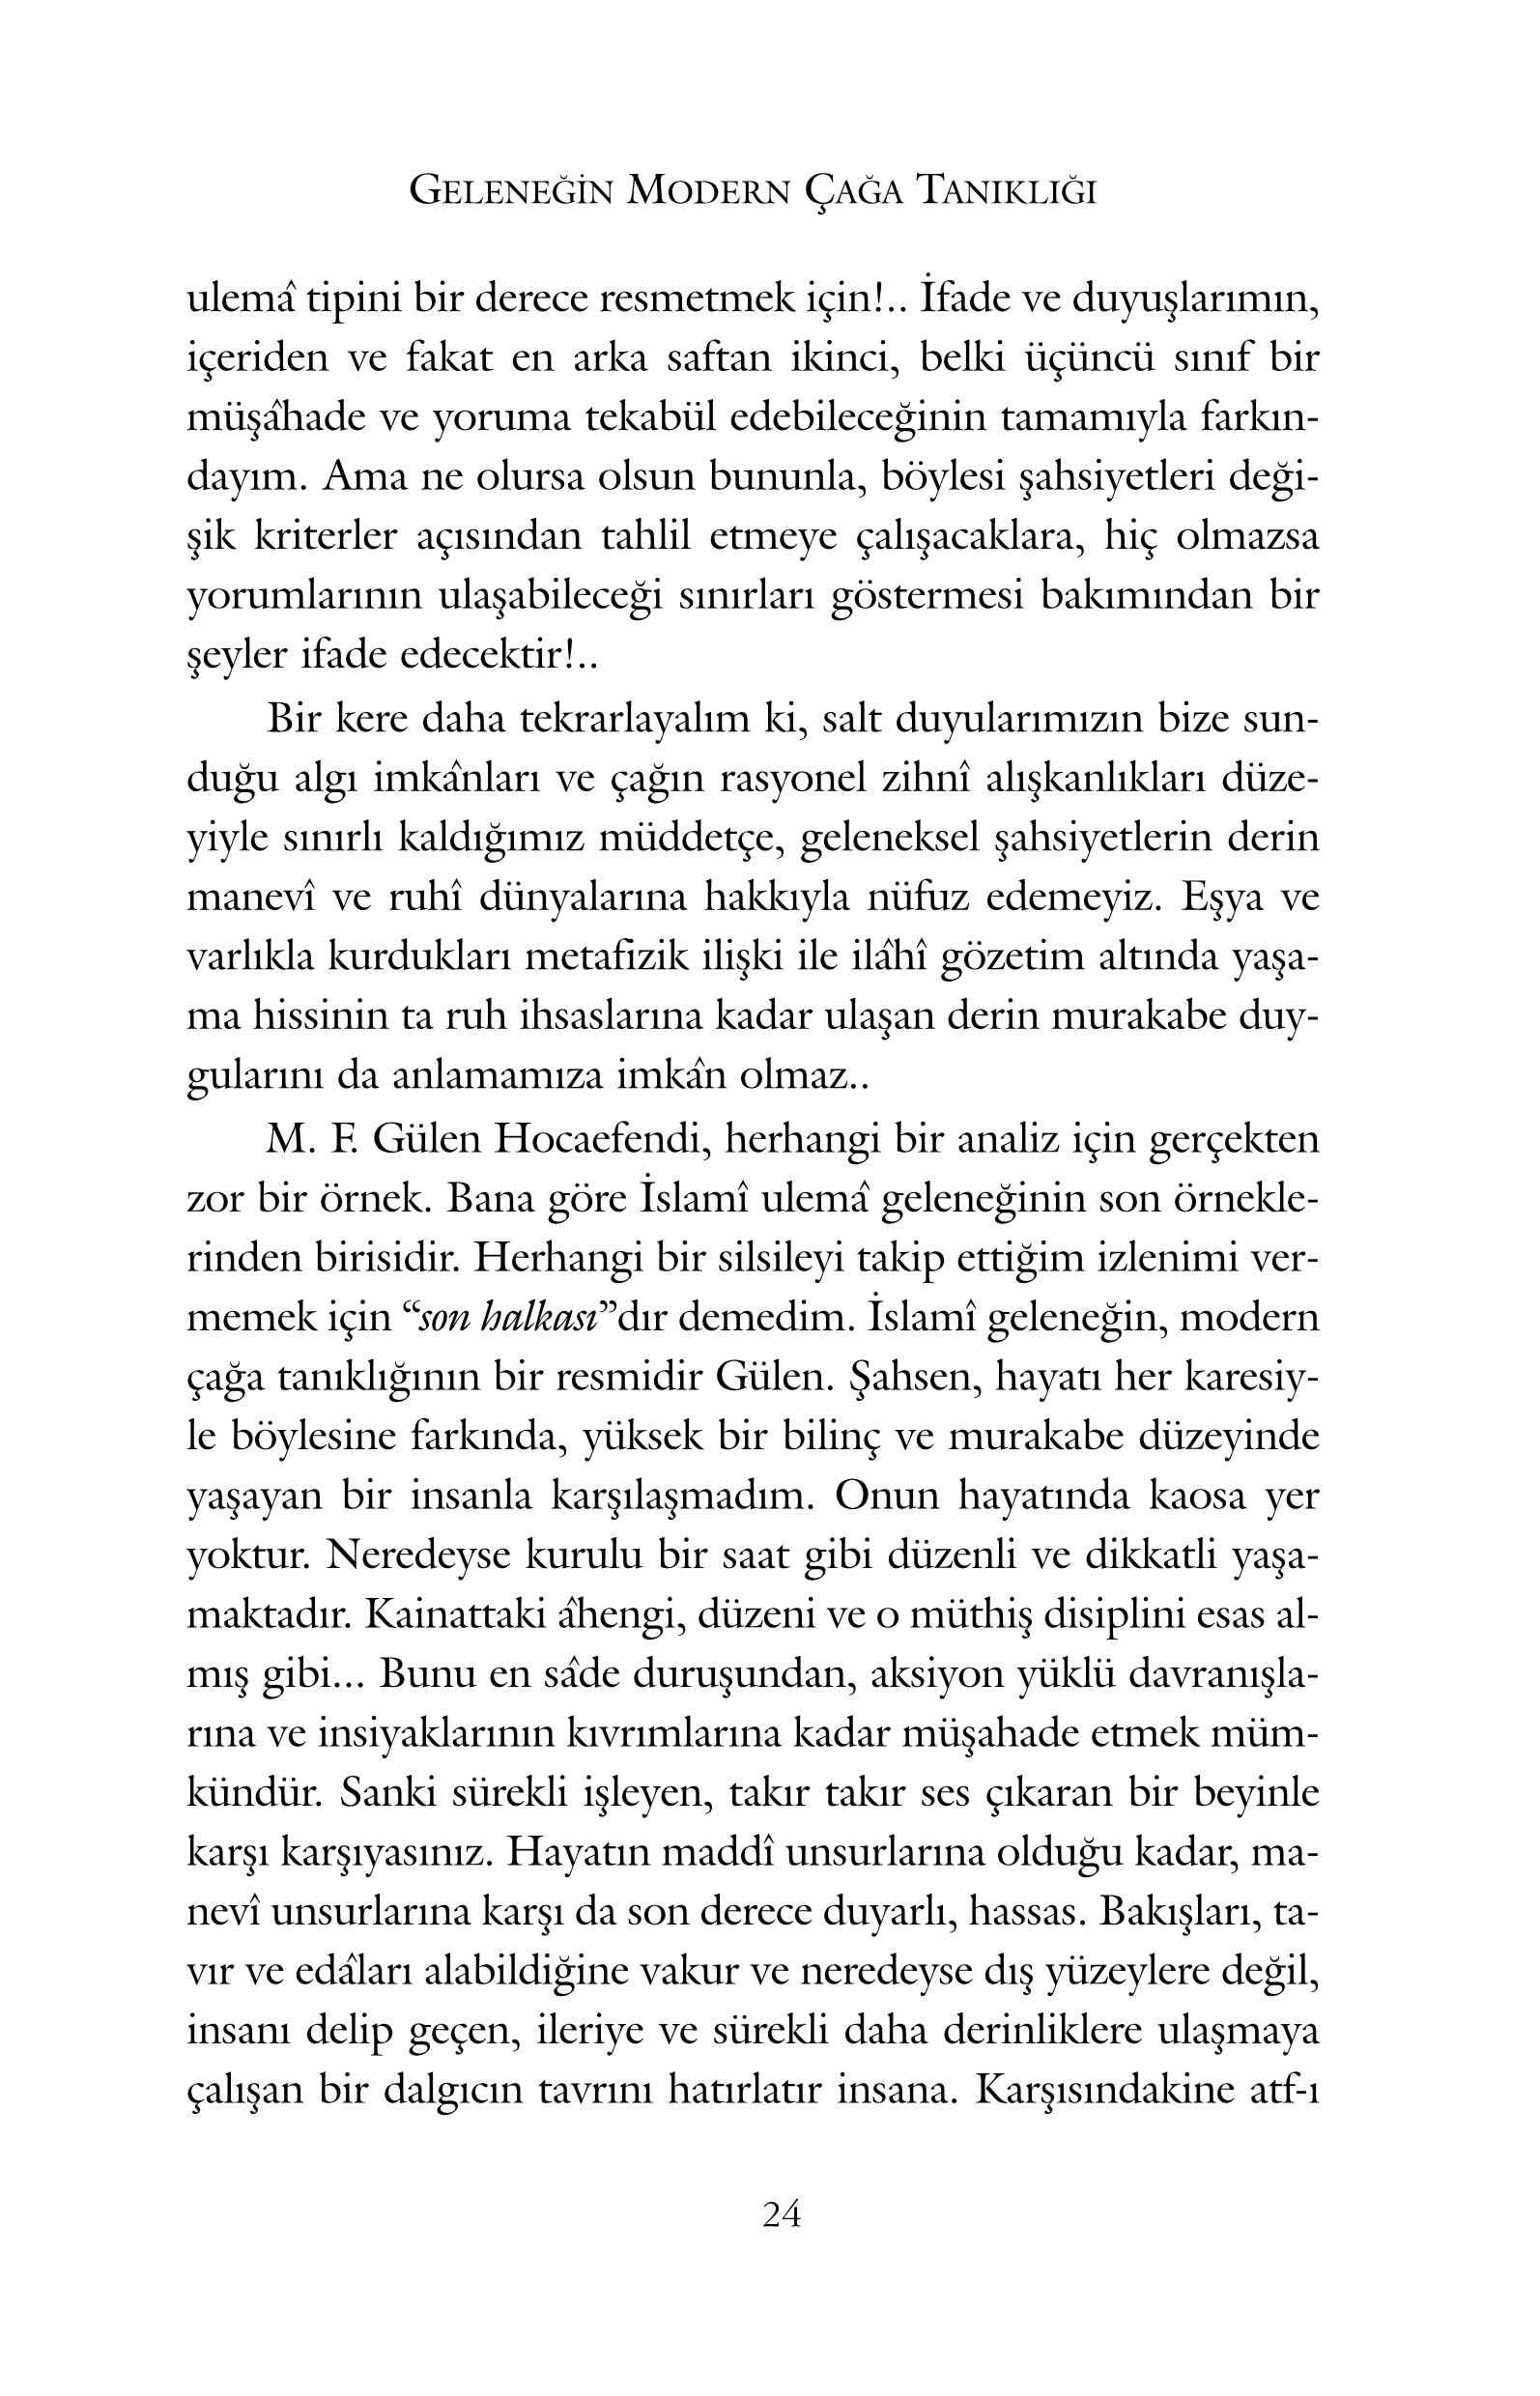 M Enes Ergene - Gulen Hareketinin Analizi - Gelenegin Modern Caga Tanikligi - IsikAkademiY.pdf, 409-Sayfa 